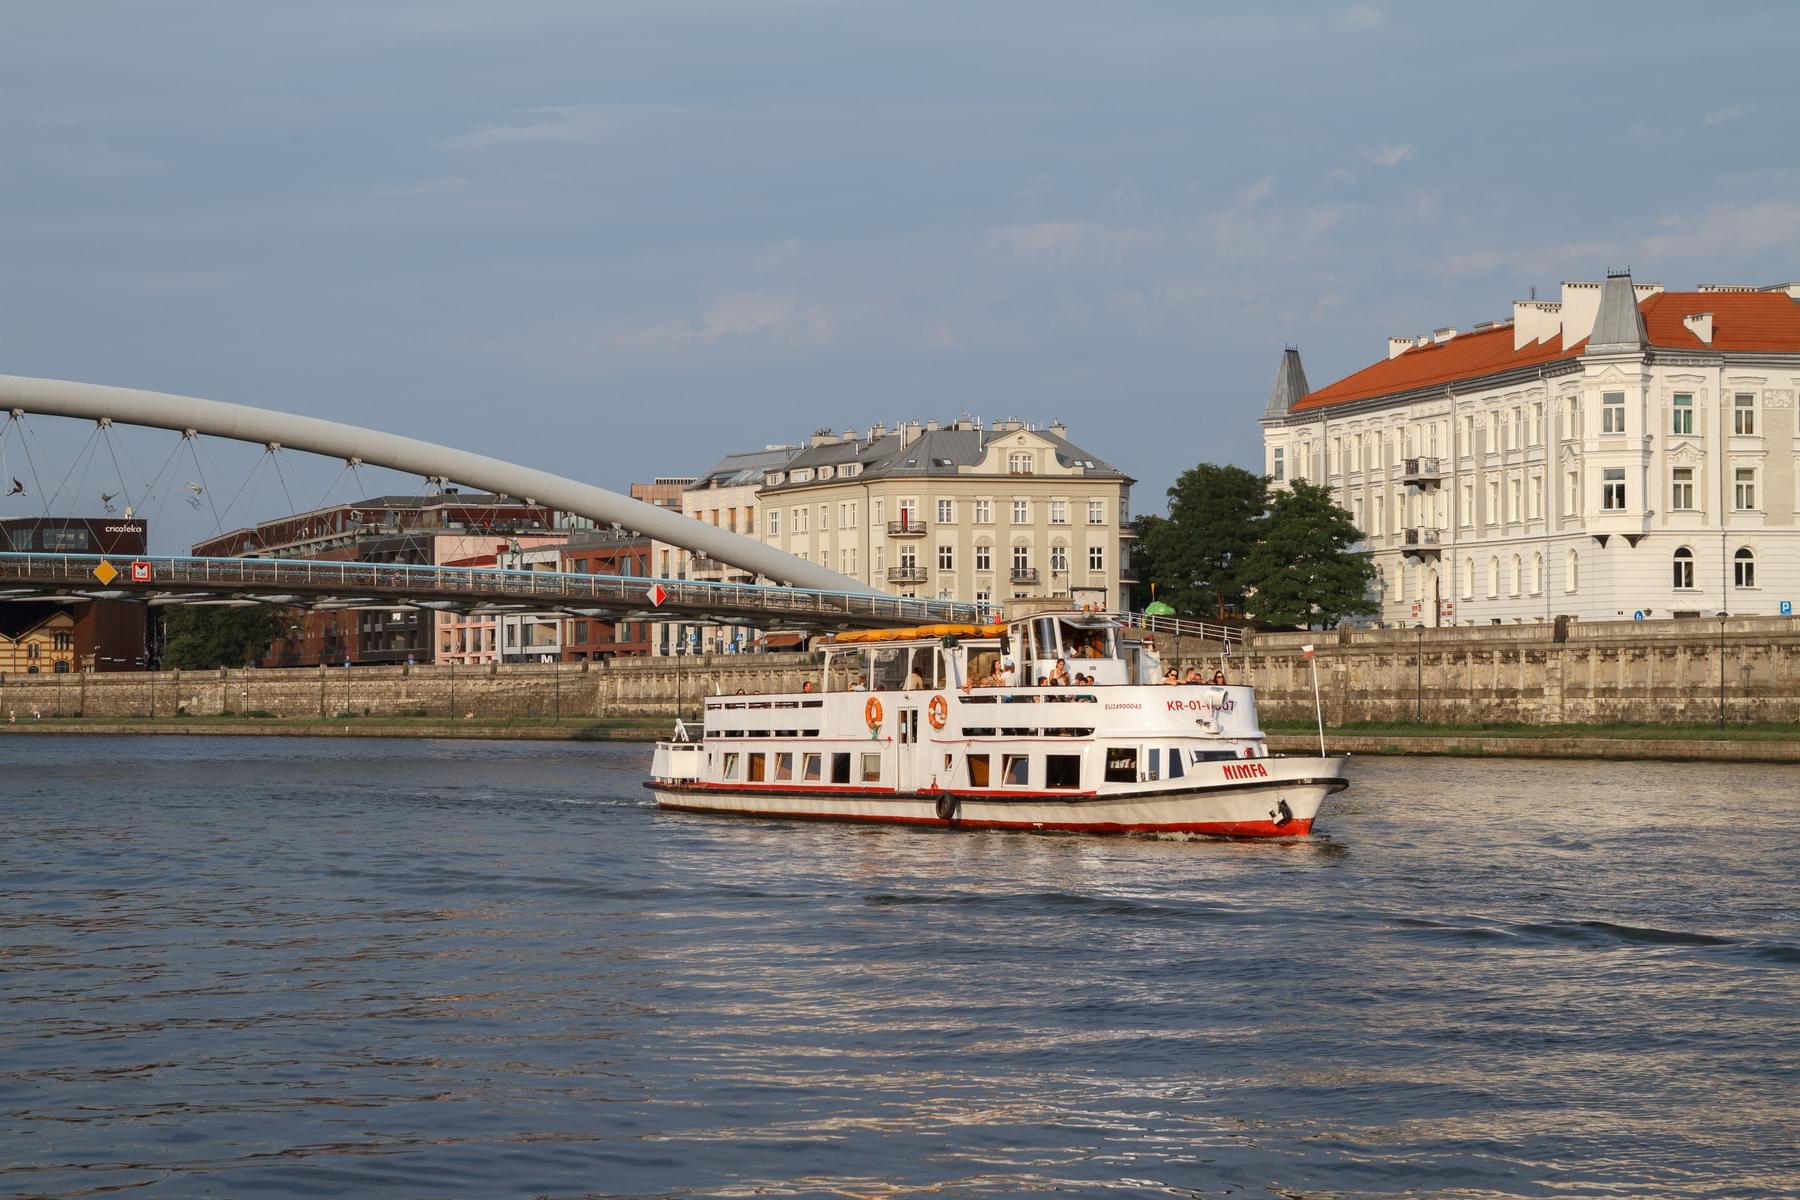 The Vistula River